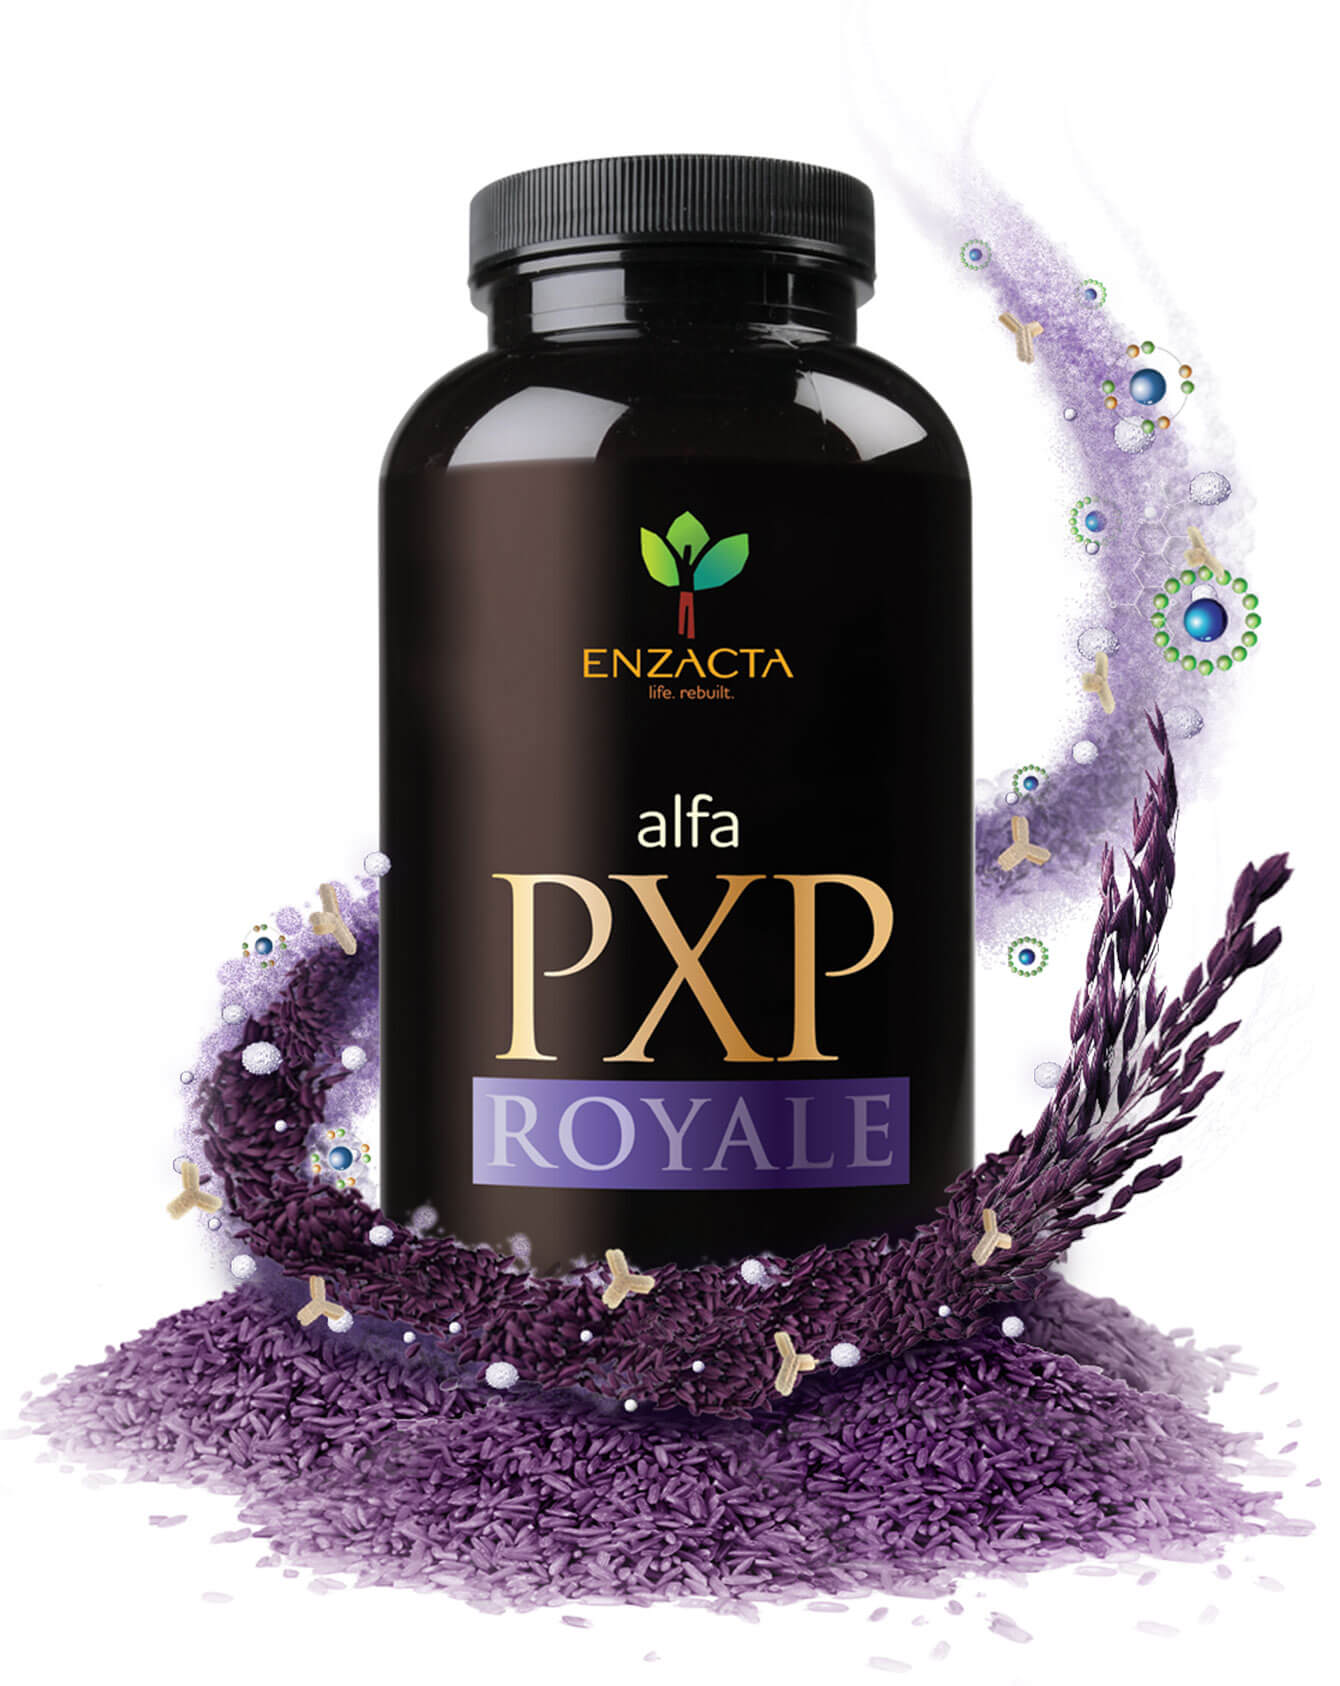 alfa PXP ROYALE - Bottle ingredients